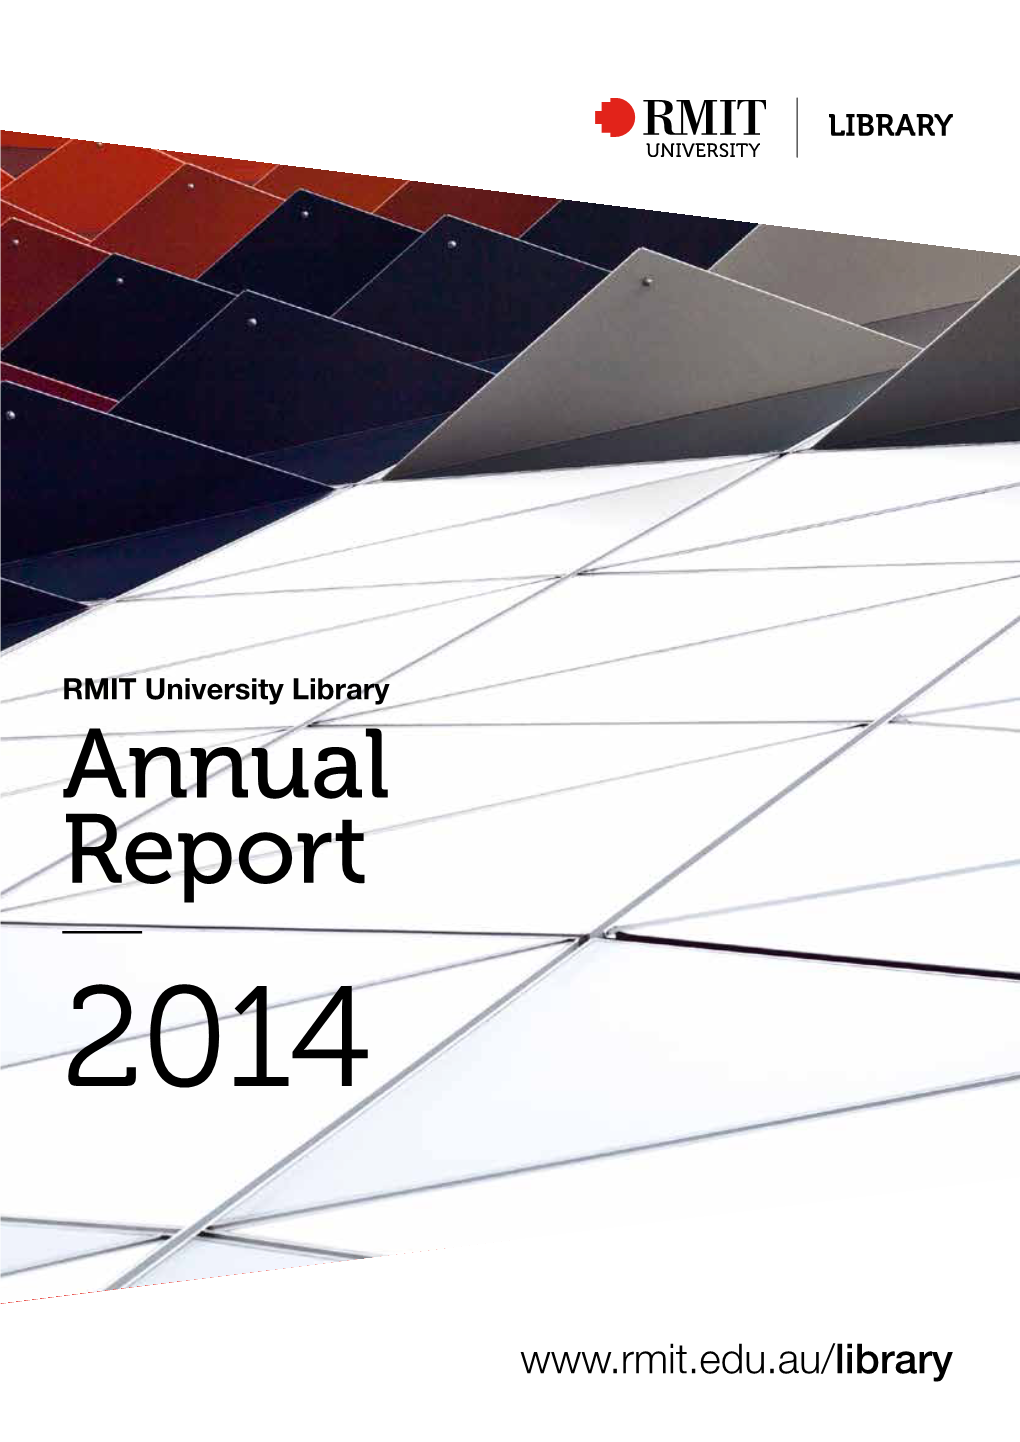 RMIT University Library Annual Report 2014